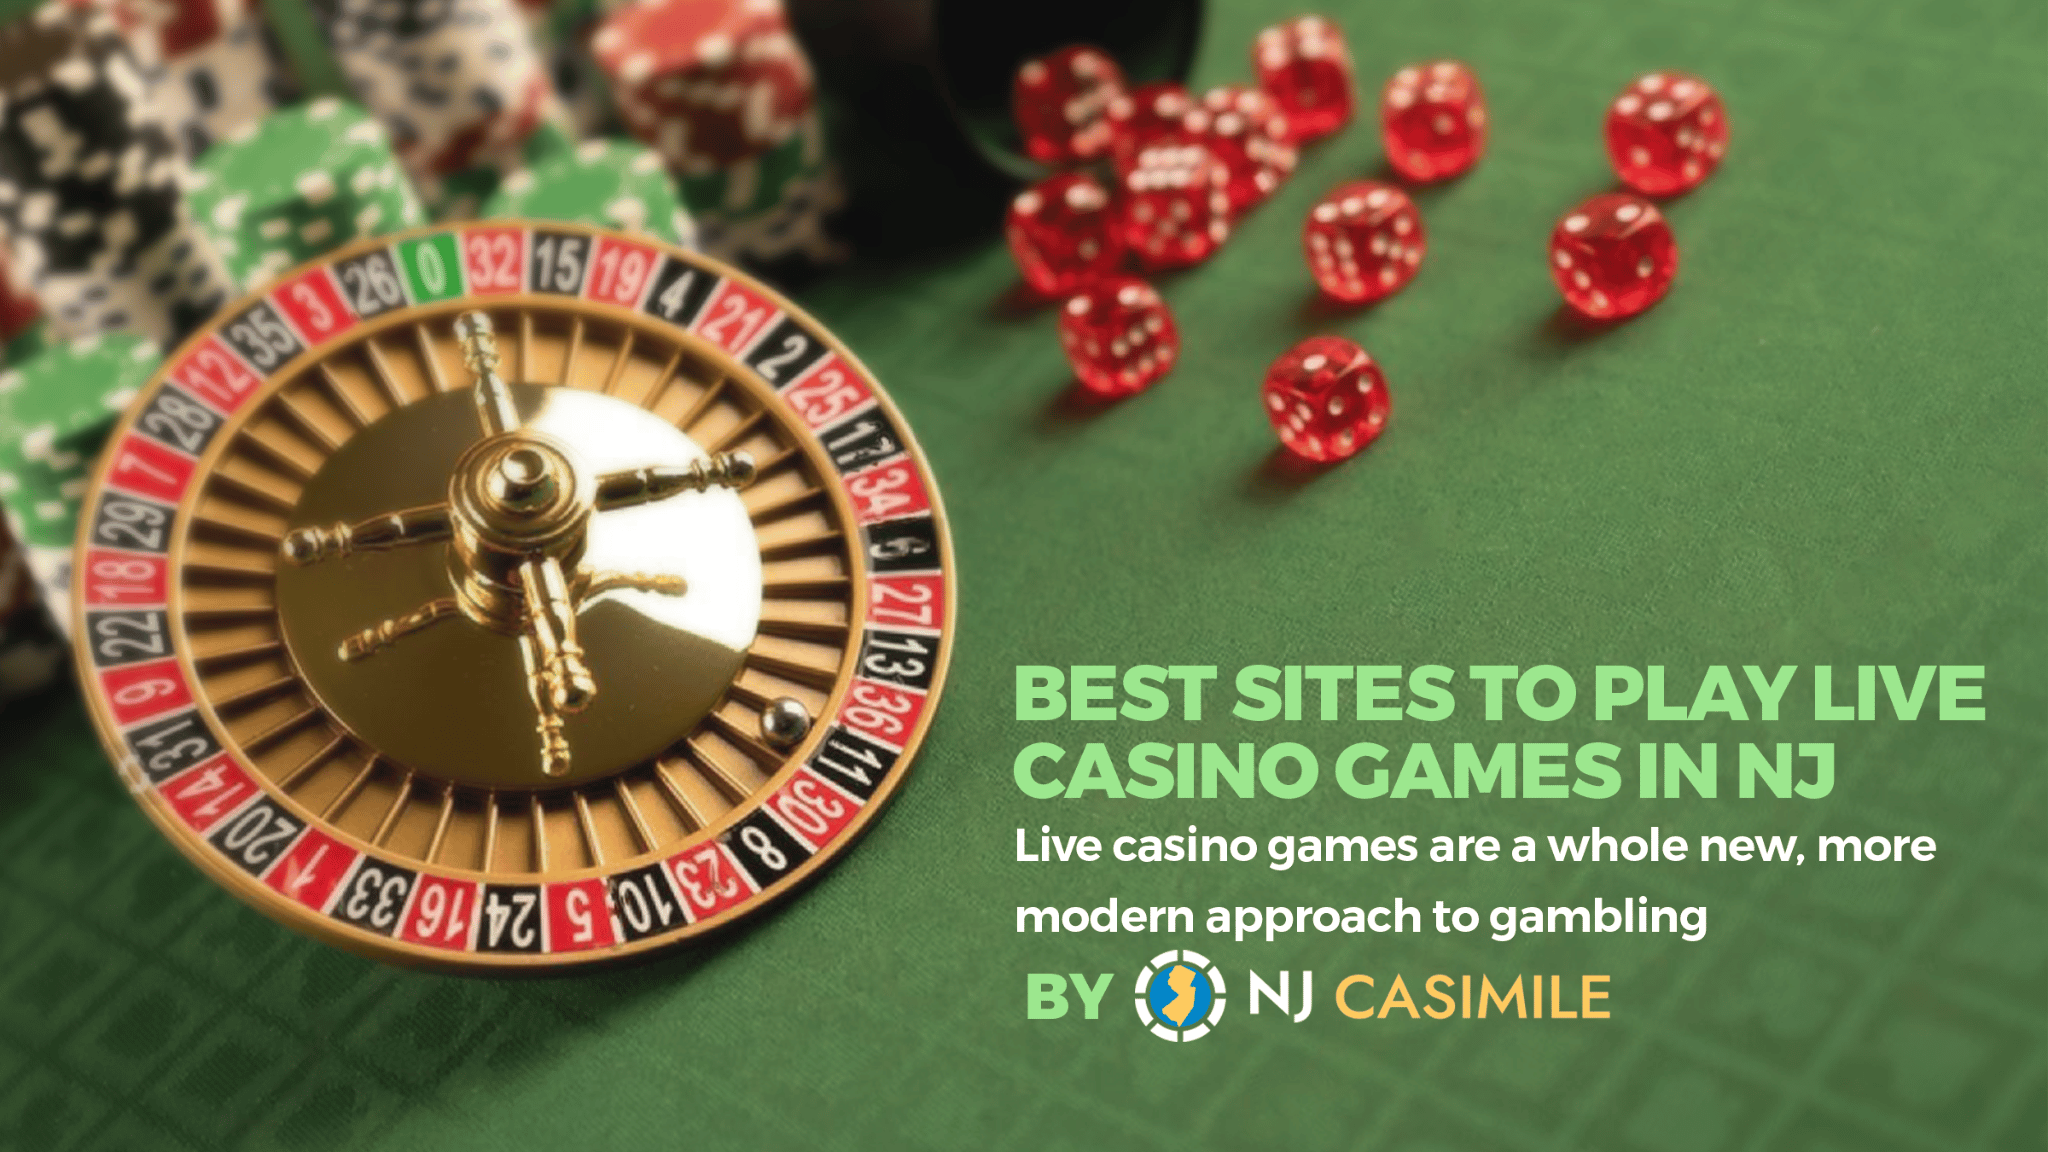 Blog on casino nice article